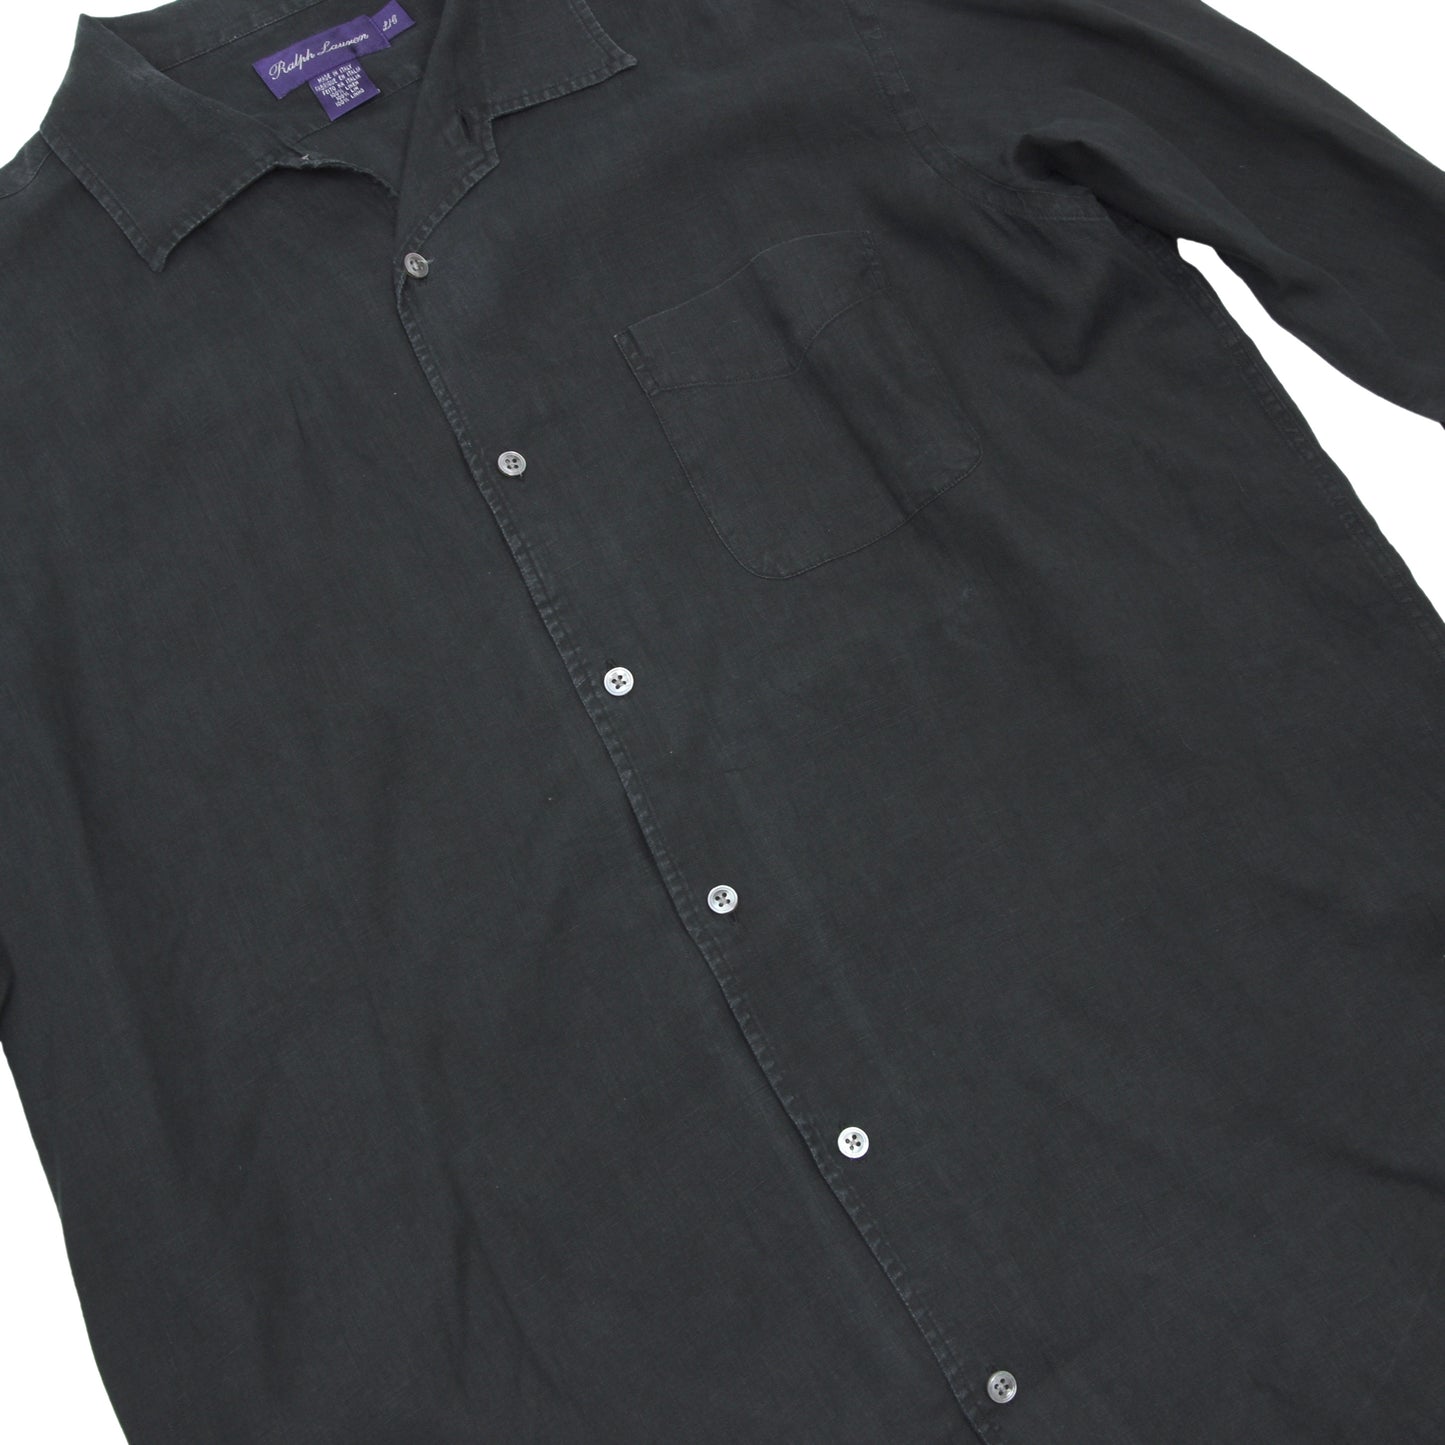 Ralph Lauren Purple Label & Etro Milano Shirts Size L - Navy Blue & Black